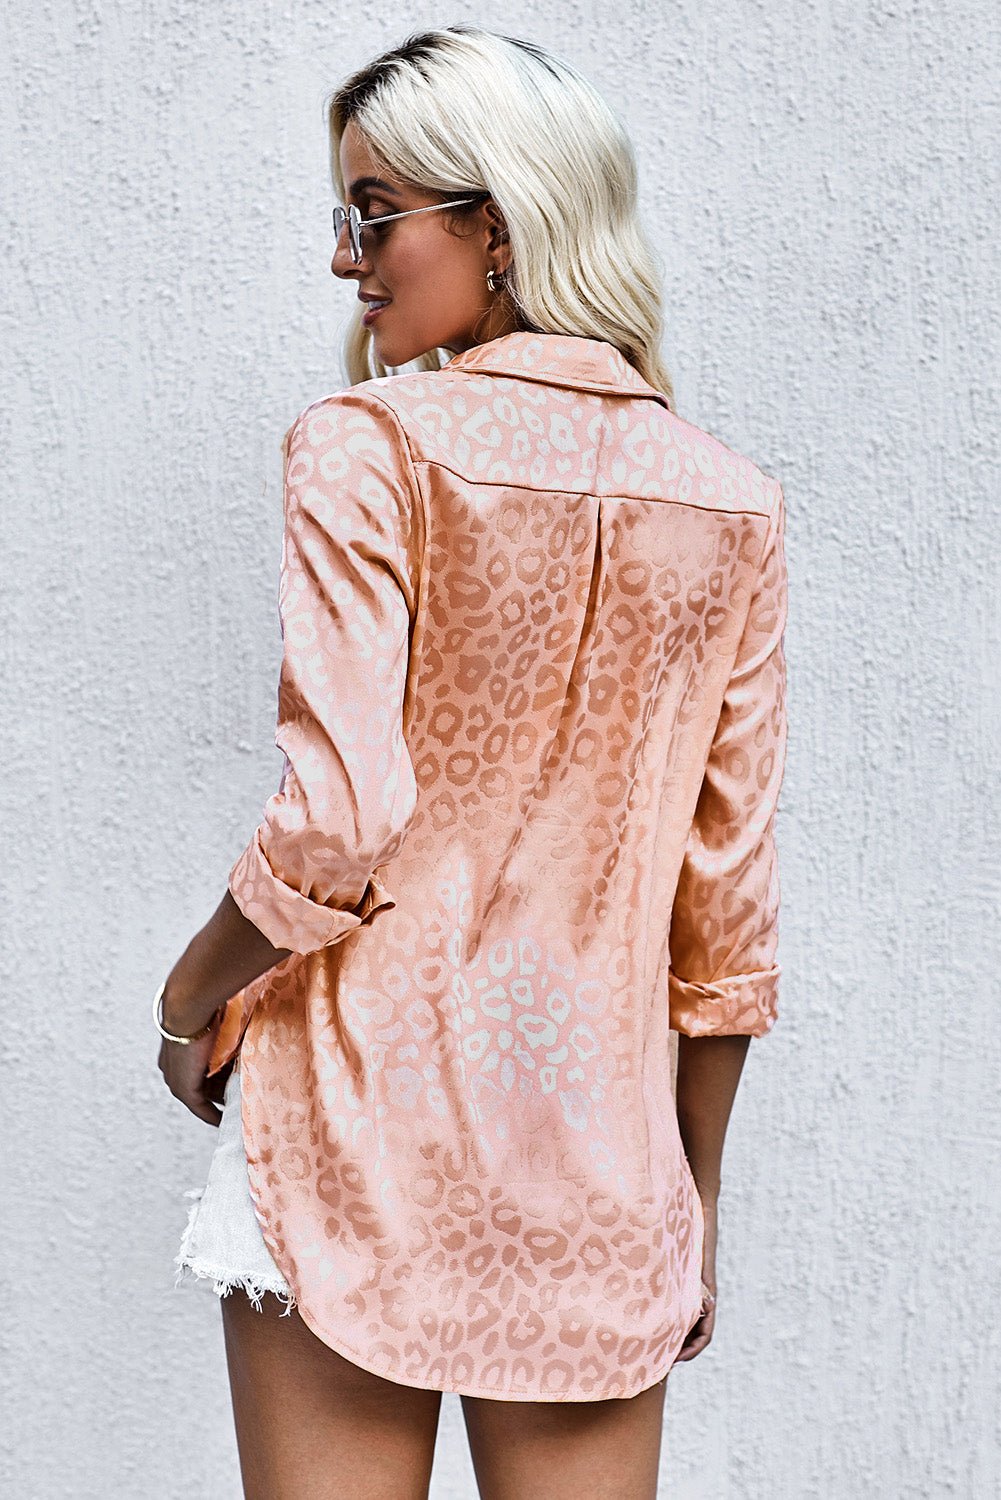 Leopard Slit High-Low Shirt - Fashion Girl Online Store